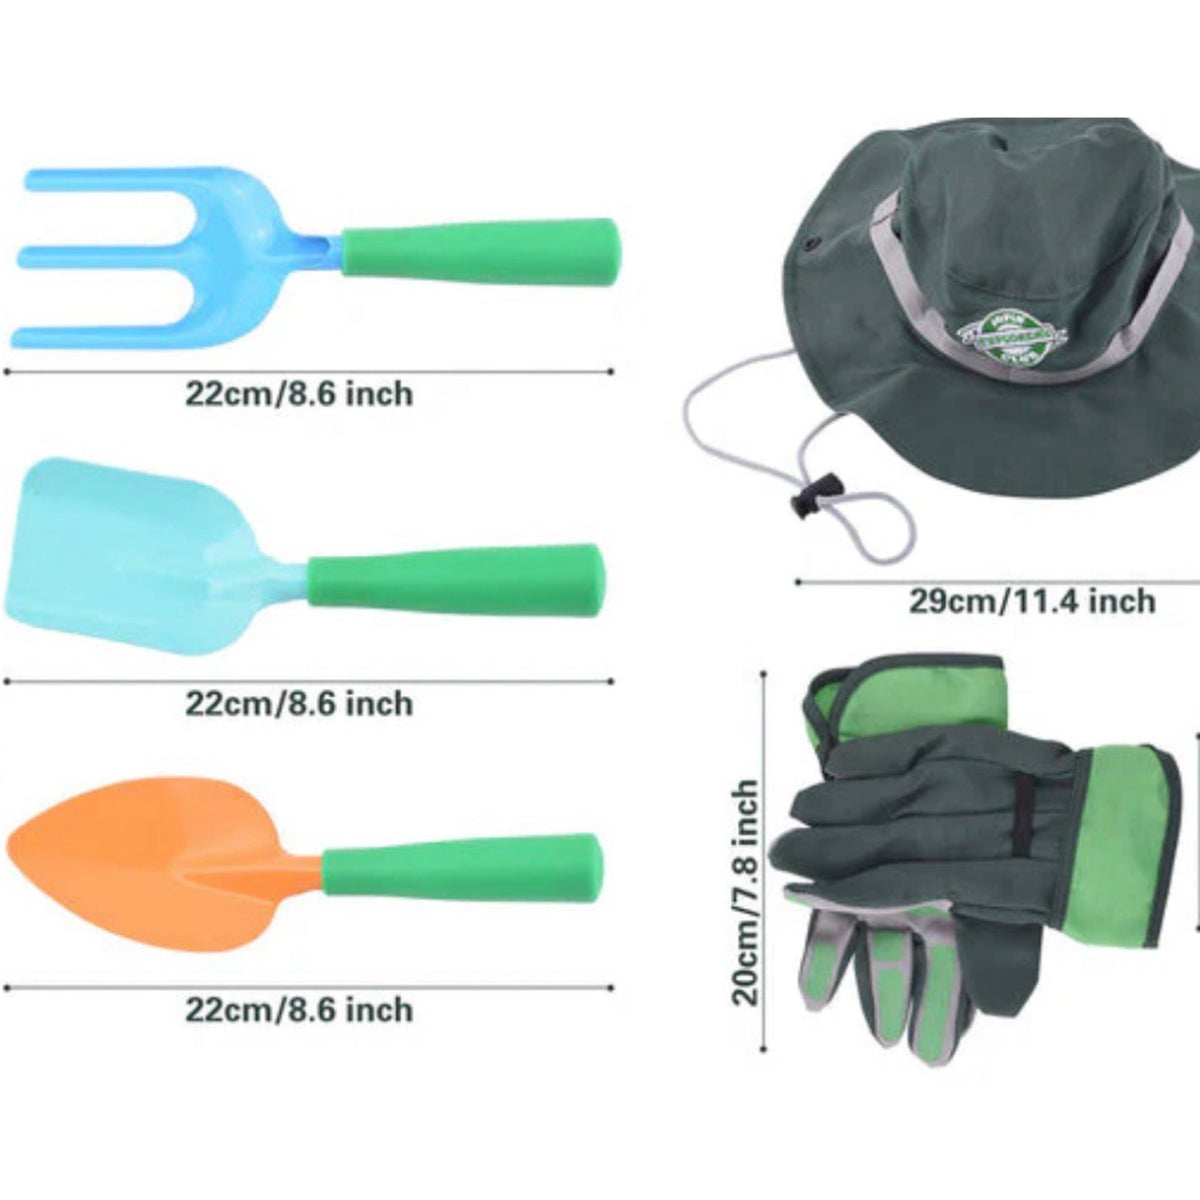 Joyin  6pc Kids  Garden Tool Set For Outdoor Play - Includes Gloves & Hat